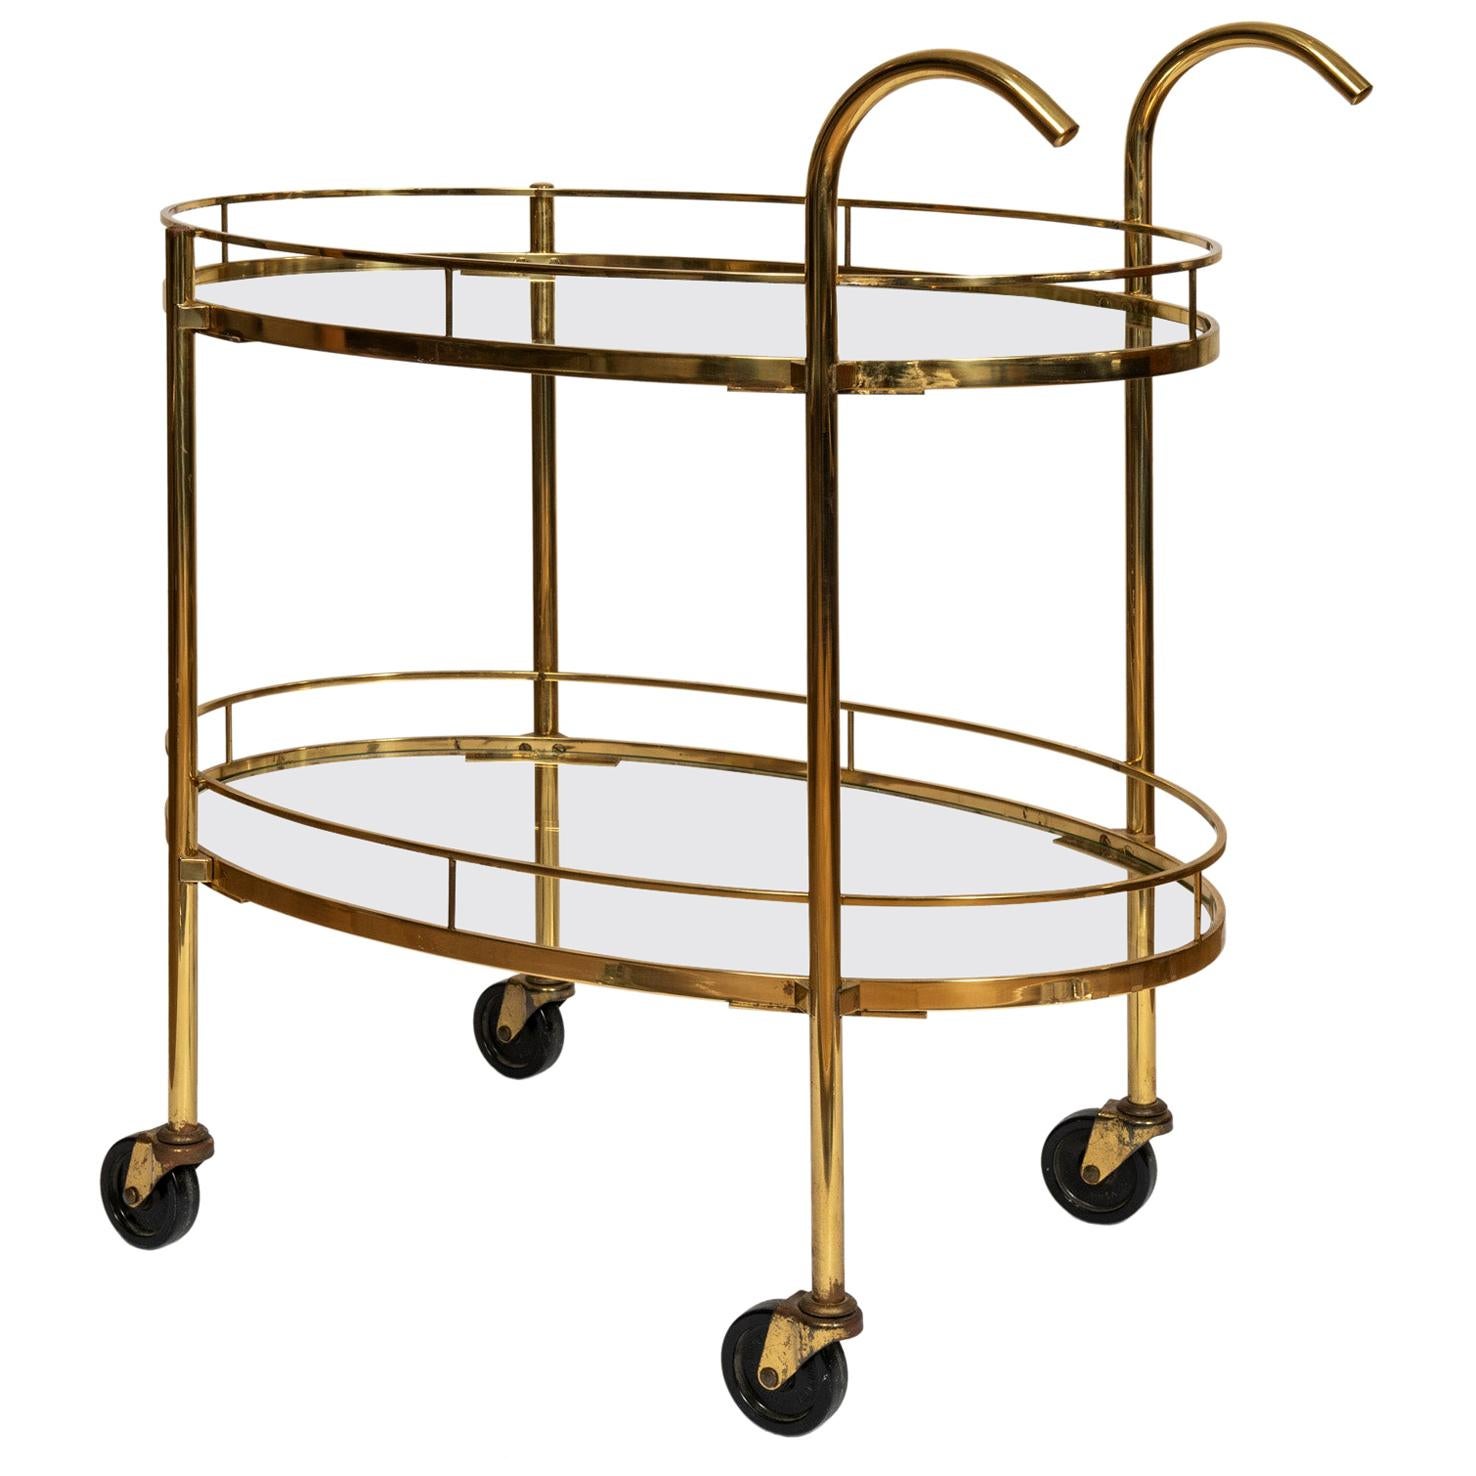 Midcentury Italian Brass "Deco" Bar Cart, circa 1960s